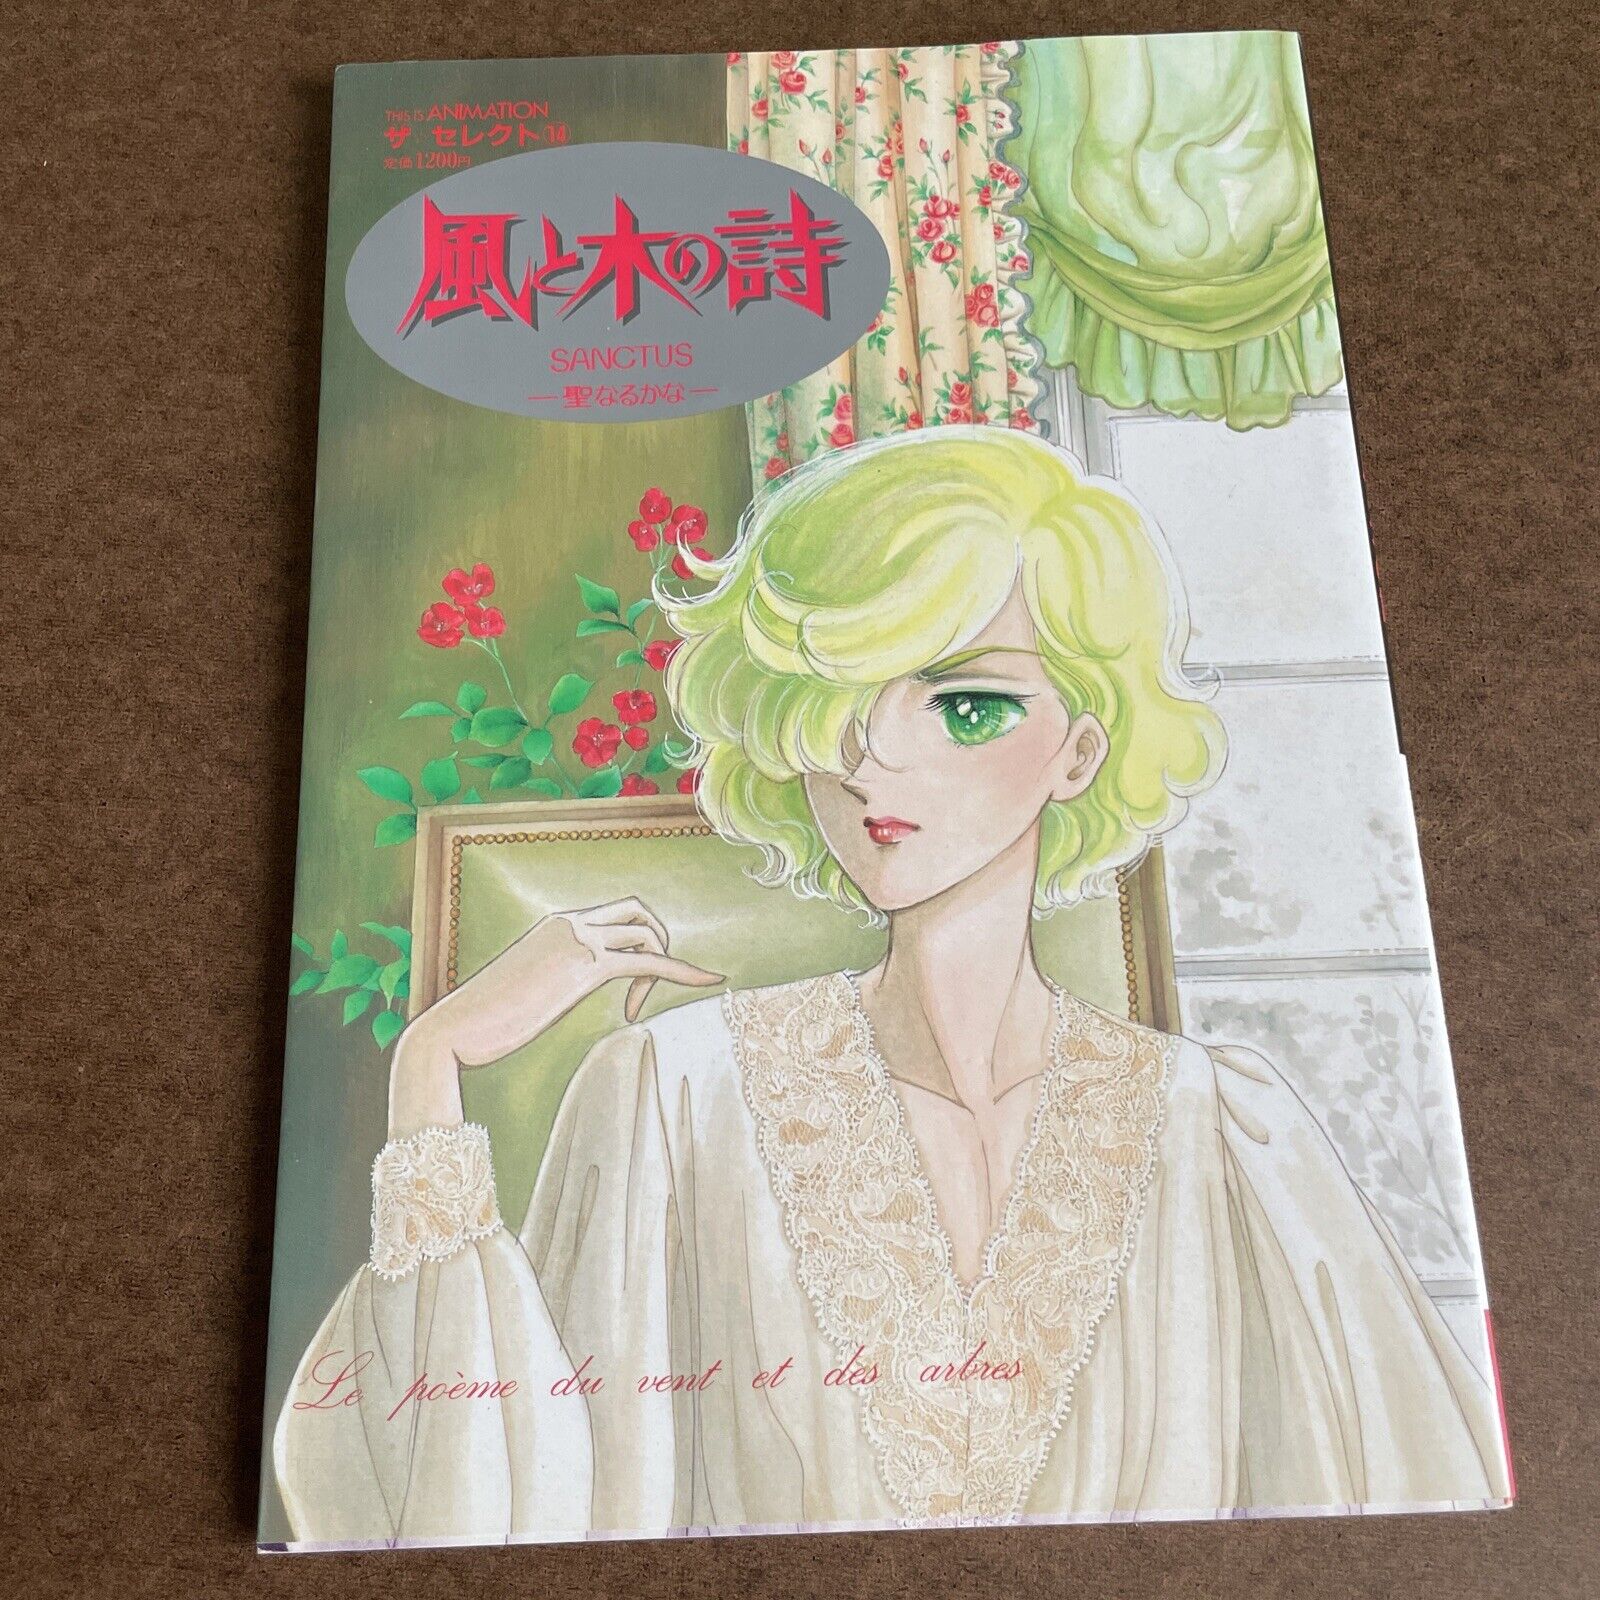 Kaze to ki no uta Keiko Takemiya Sanctus OVA Artbook